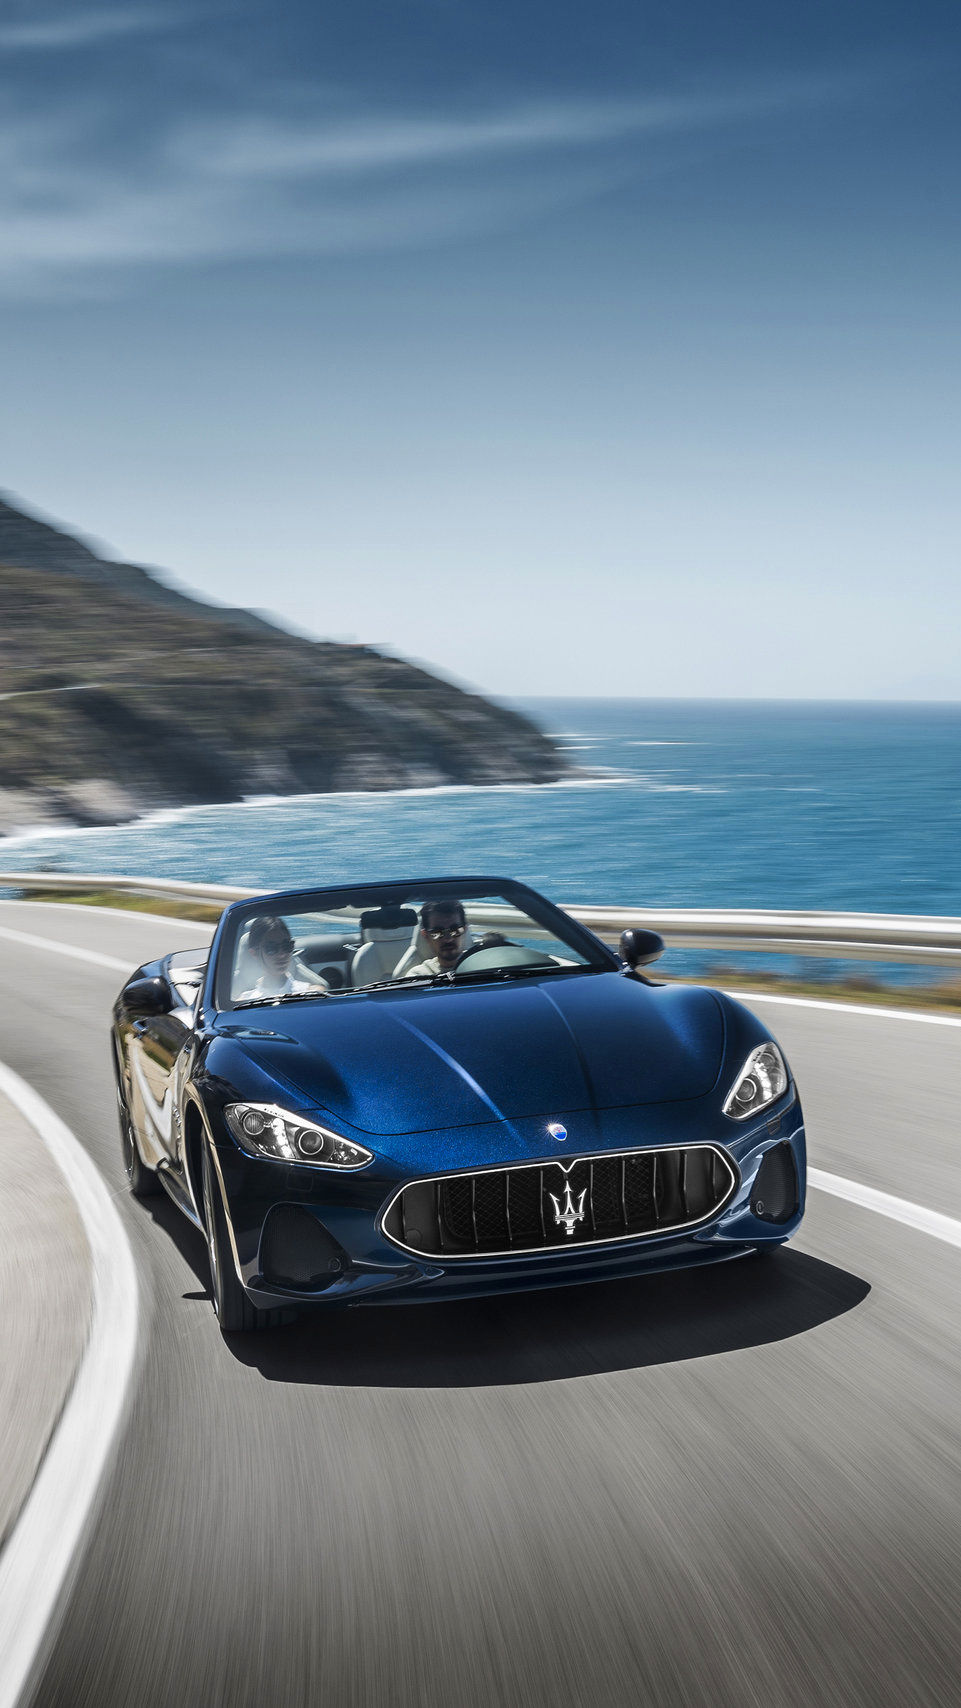 Maserati GranCabrio - in der Kurve - Landschaft am Meer